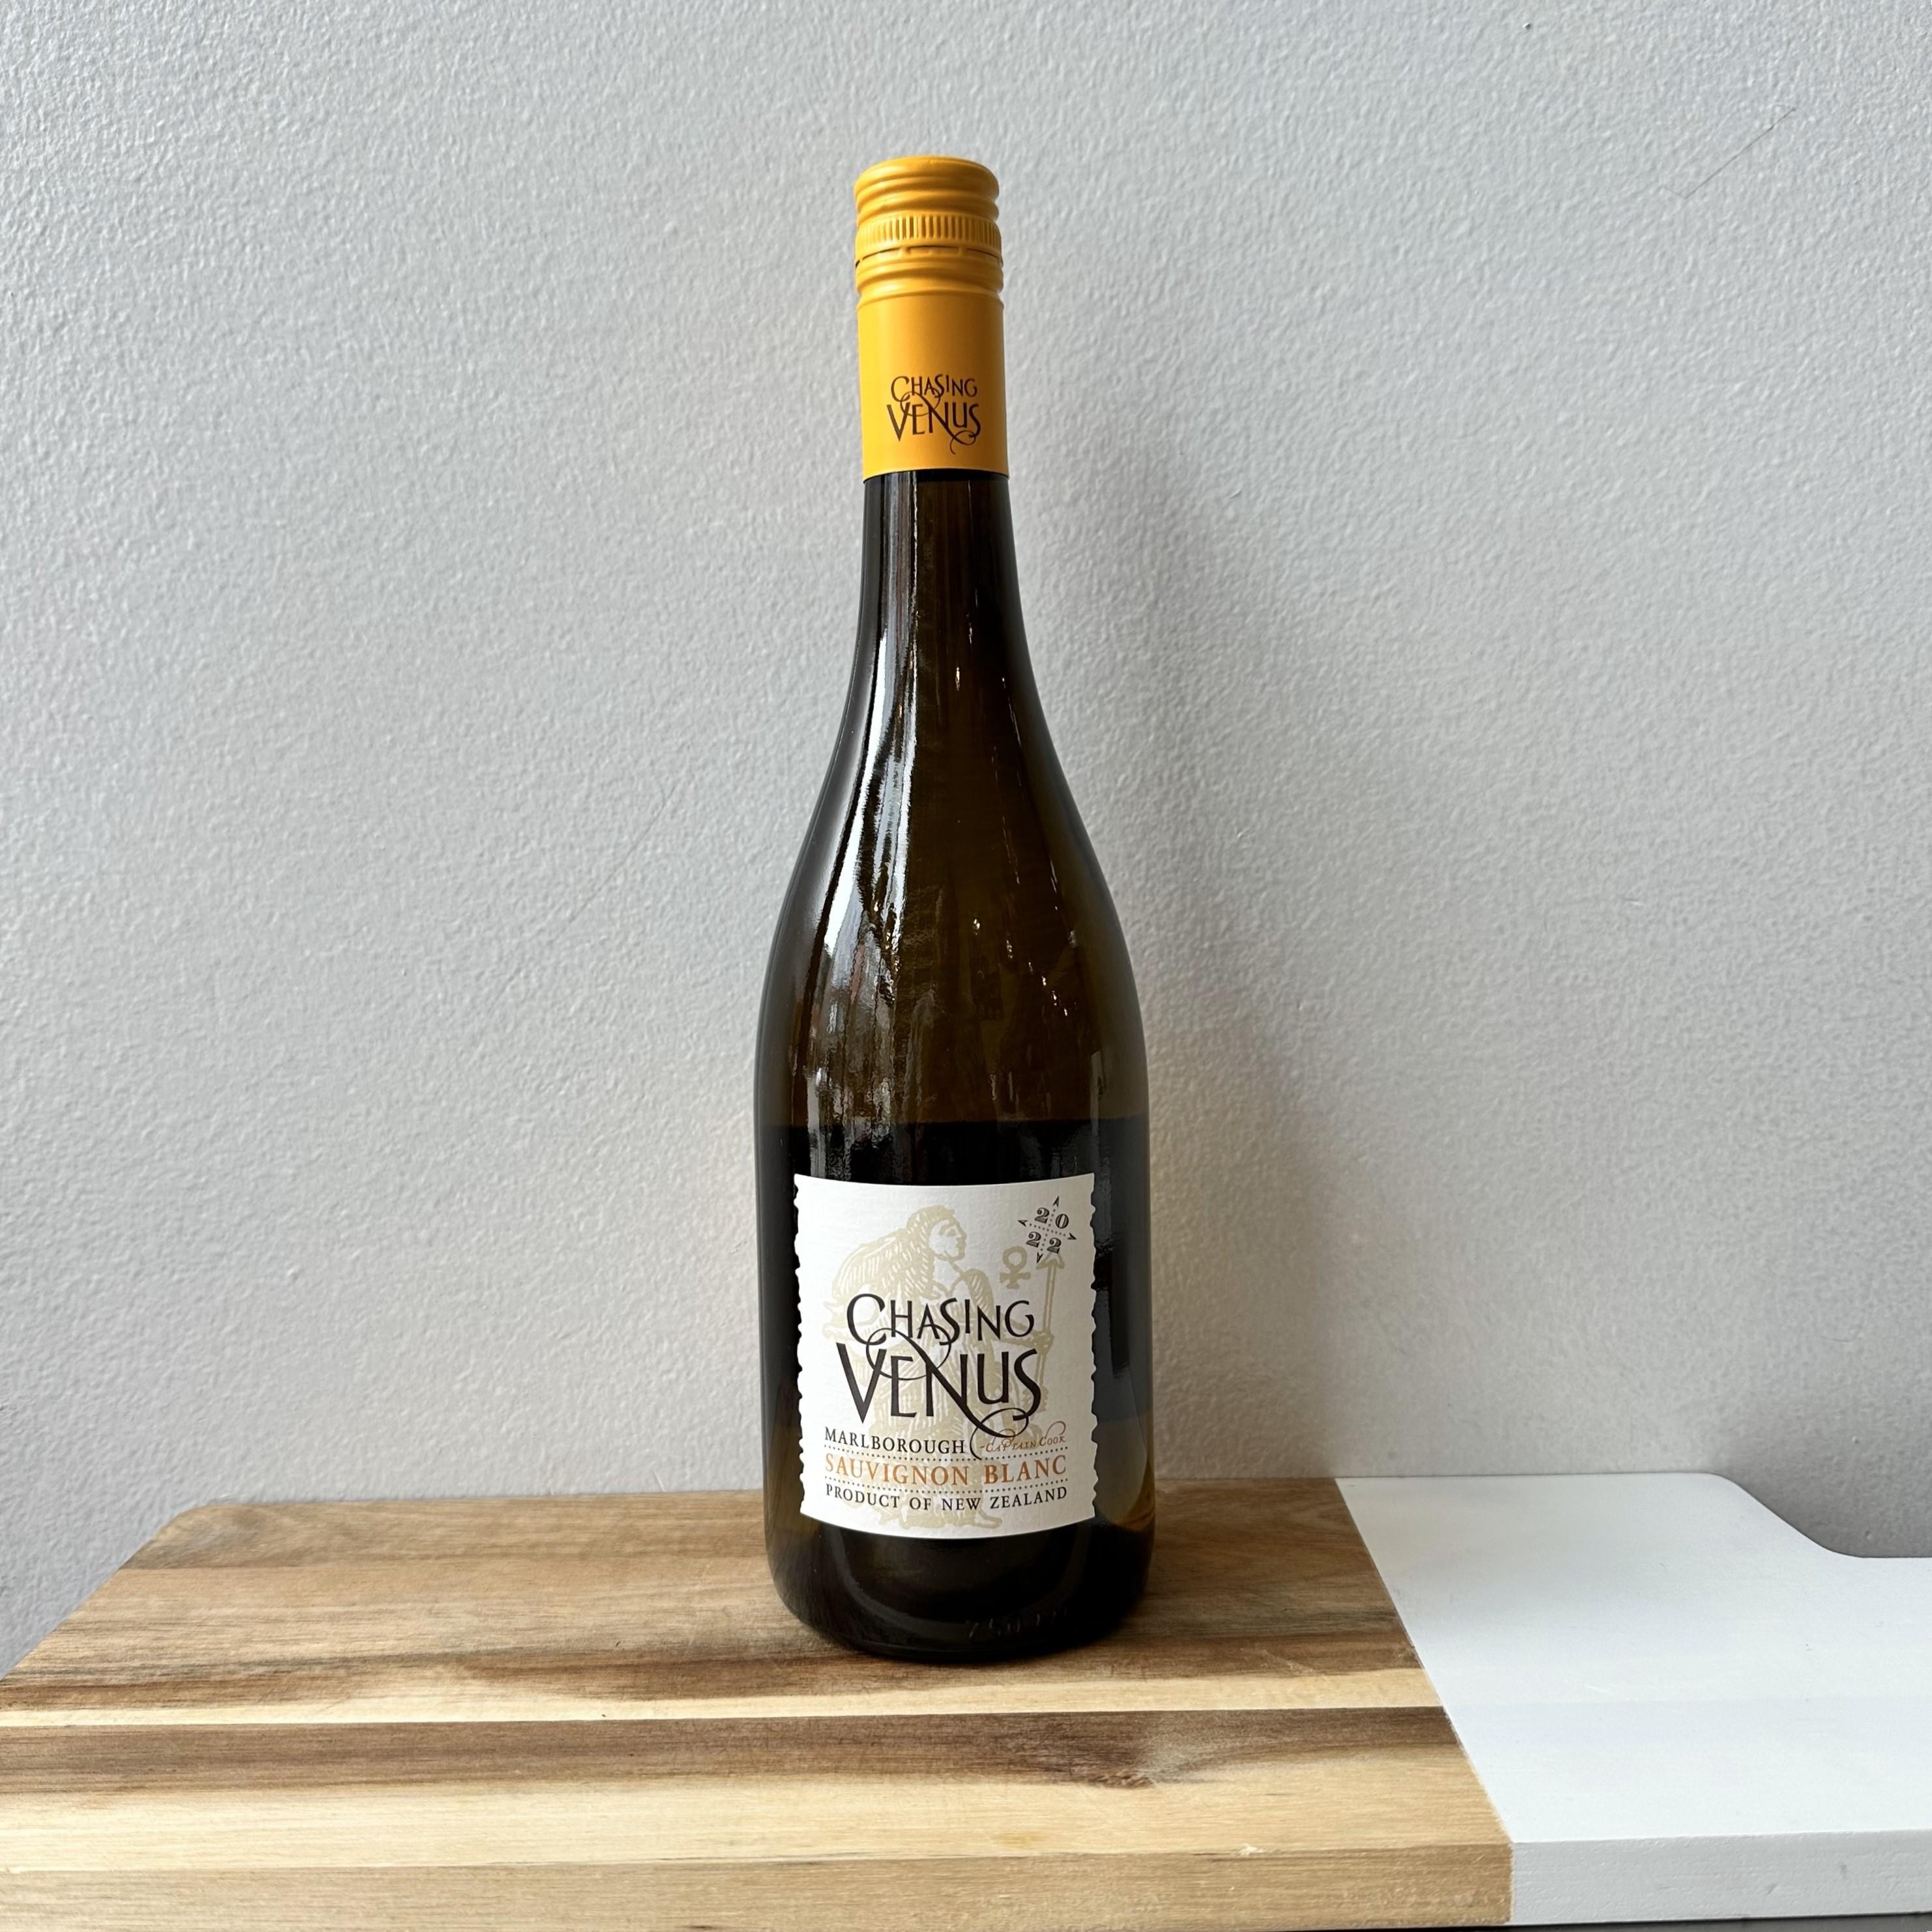 Matchbook Wines "Chasing Venus" Sauvignon Blanc 2022 New Zealand